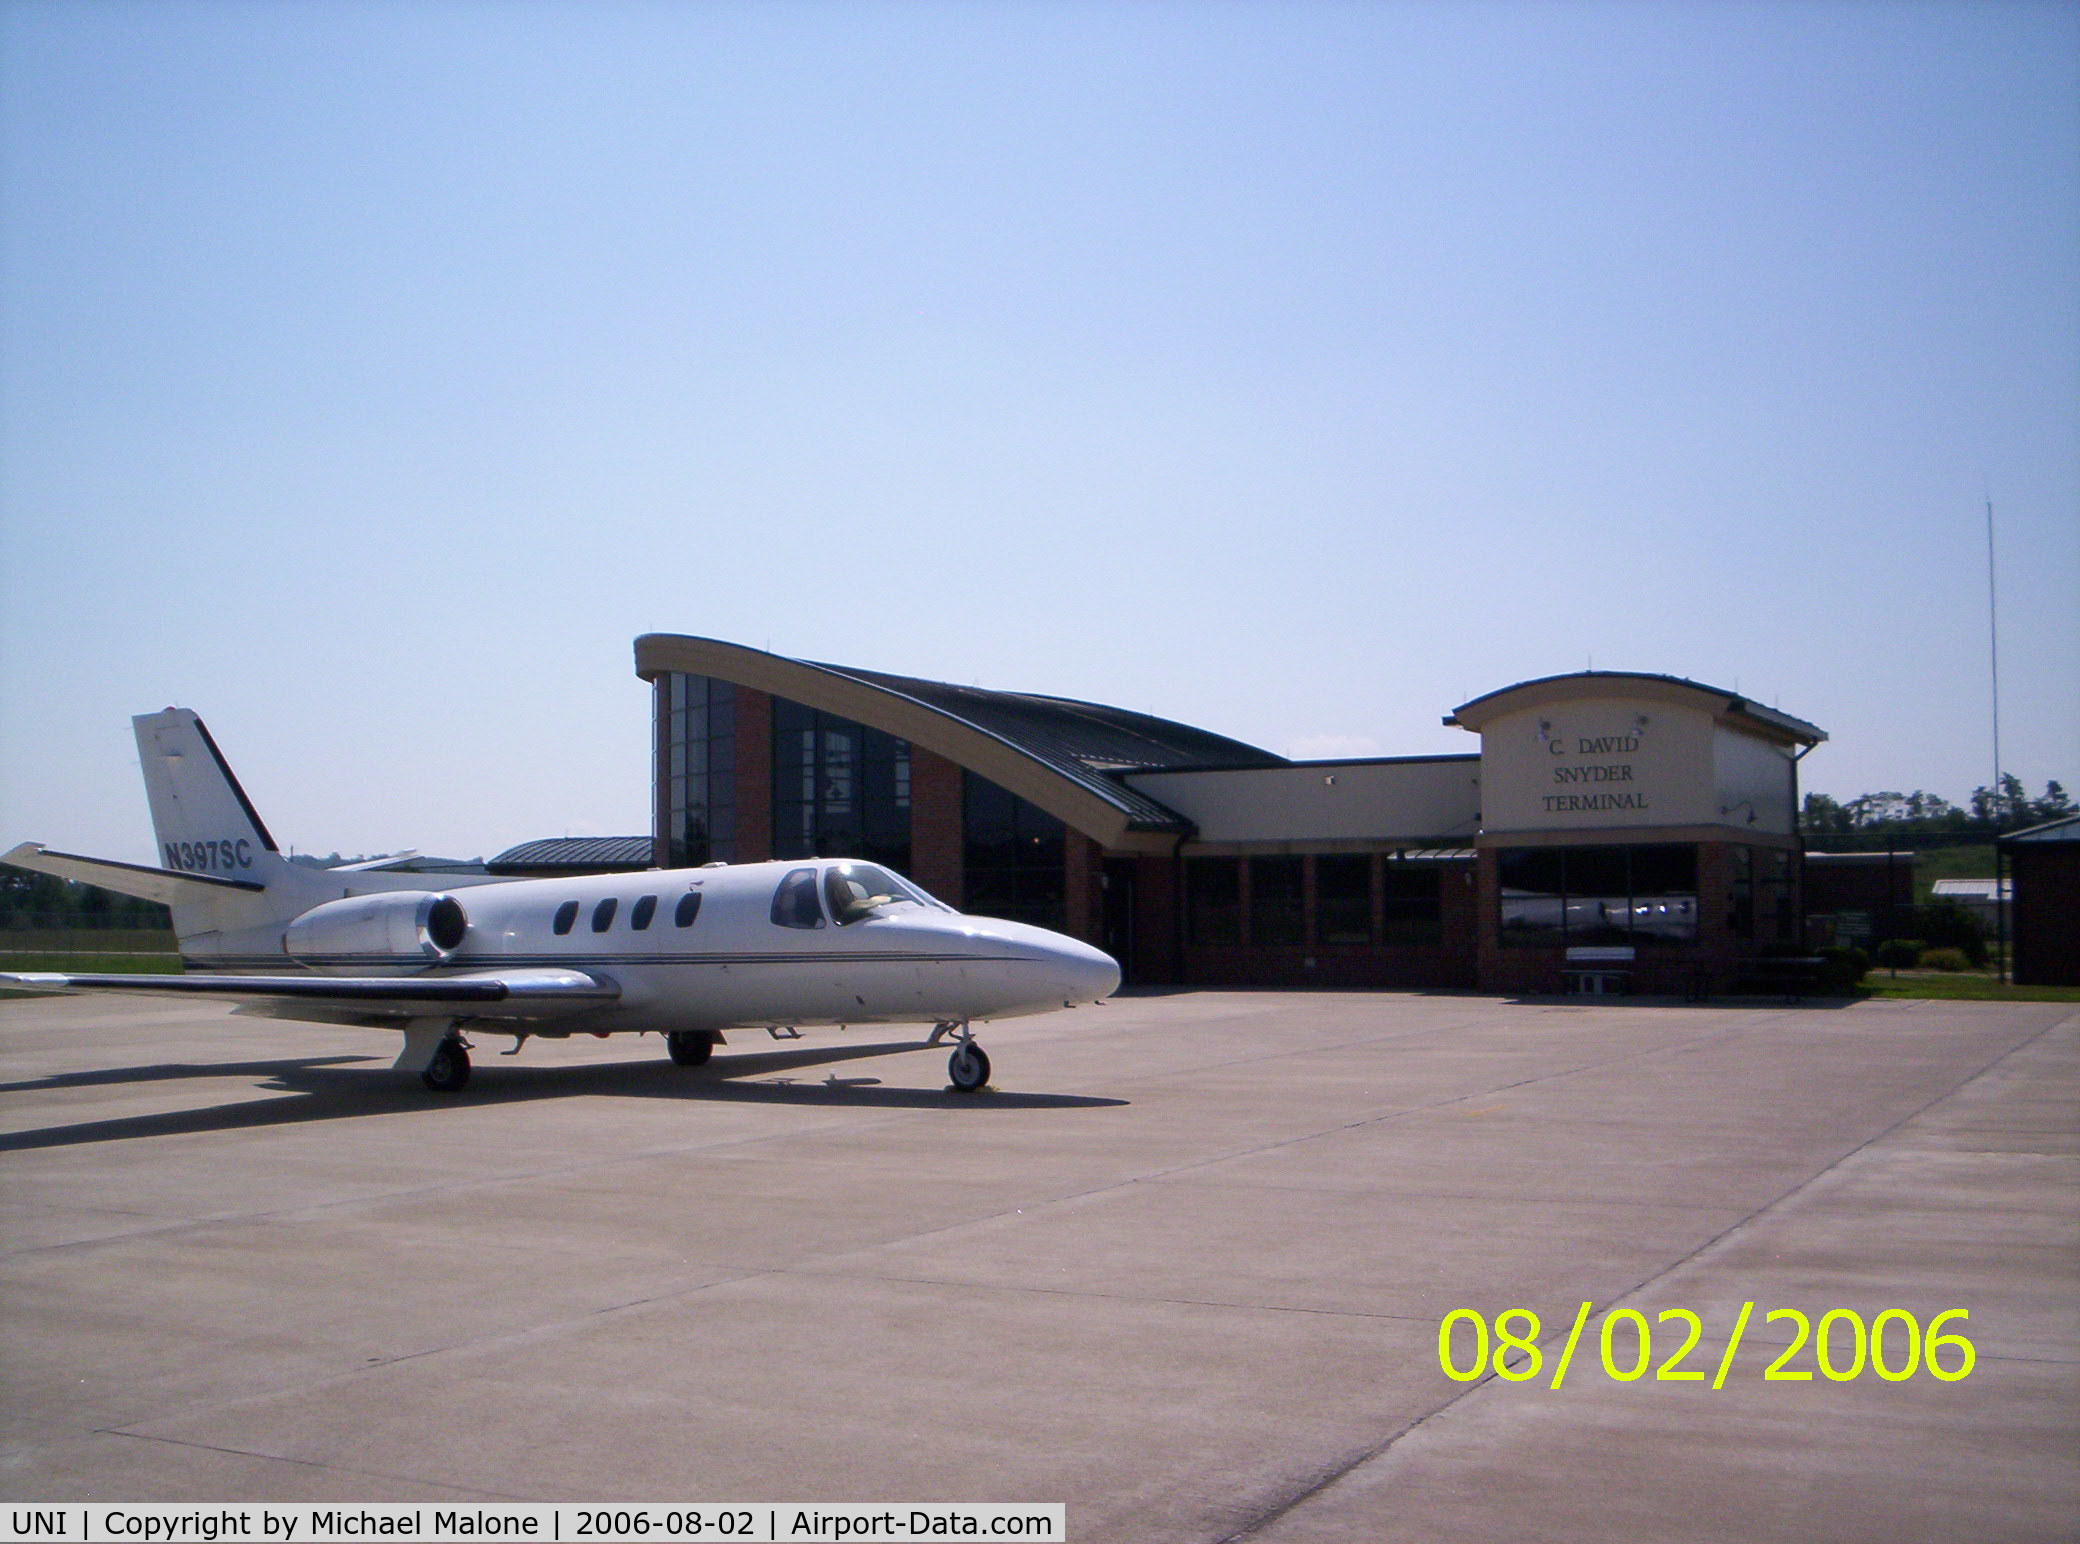 Ohio University Snyder Field Airport (UNI) - Ohio University Airport